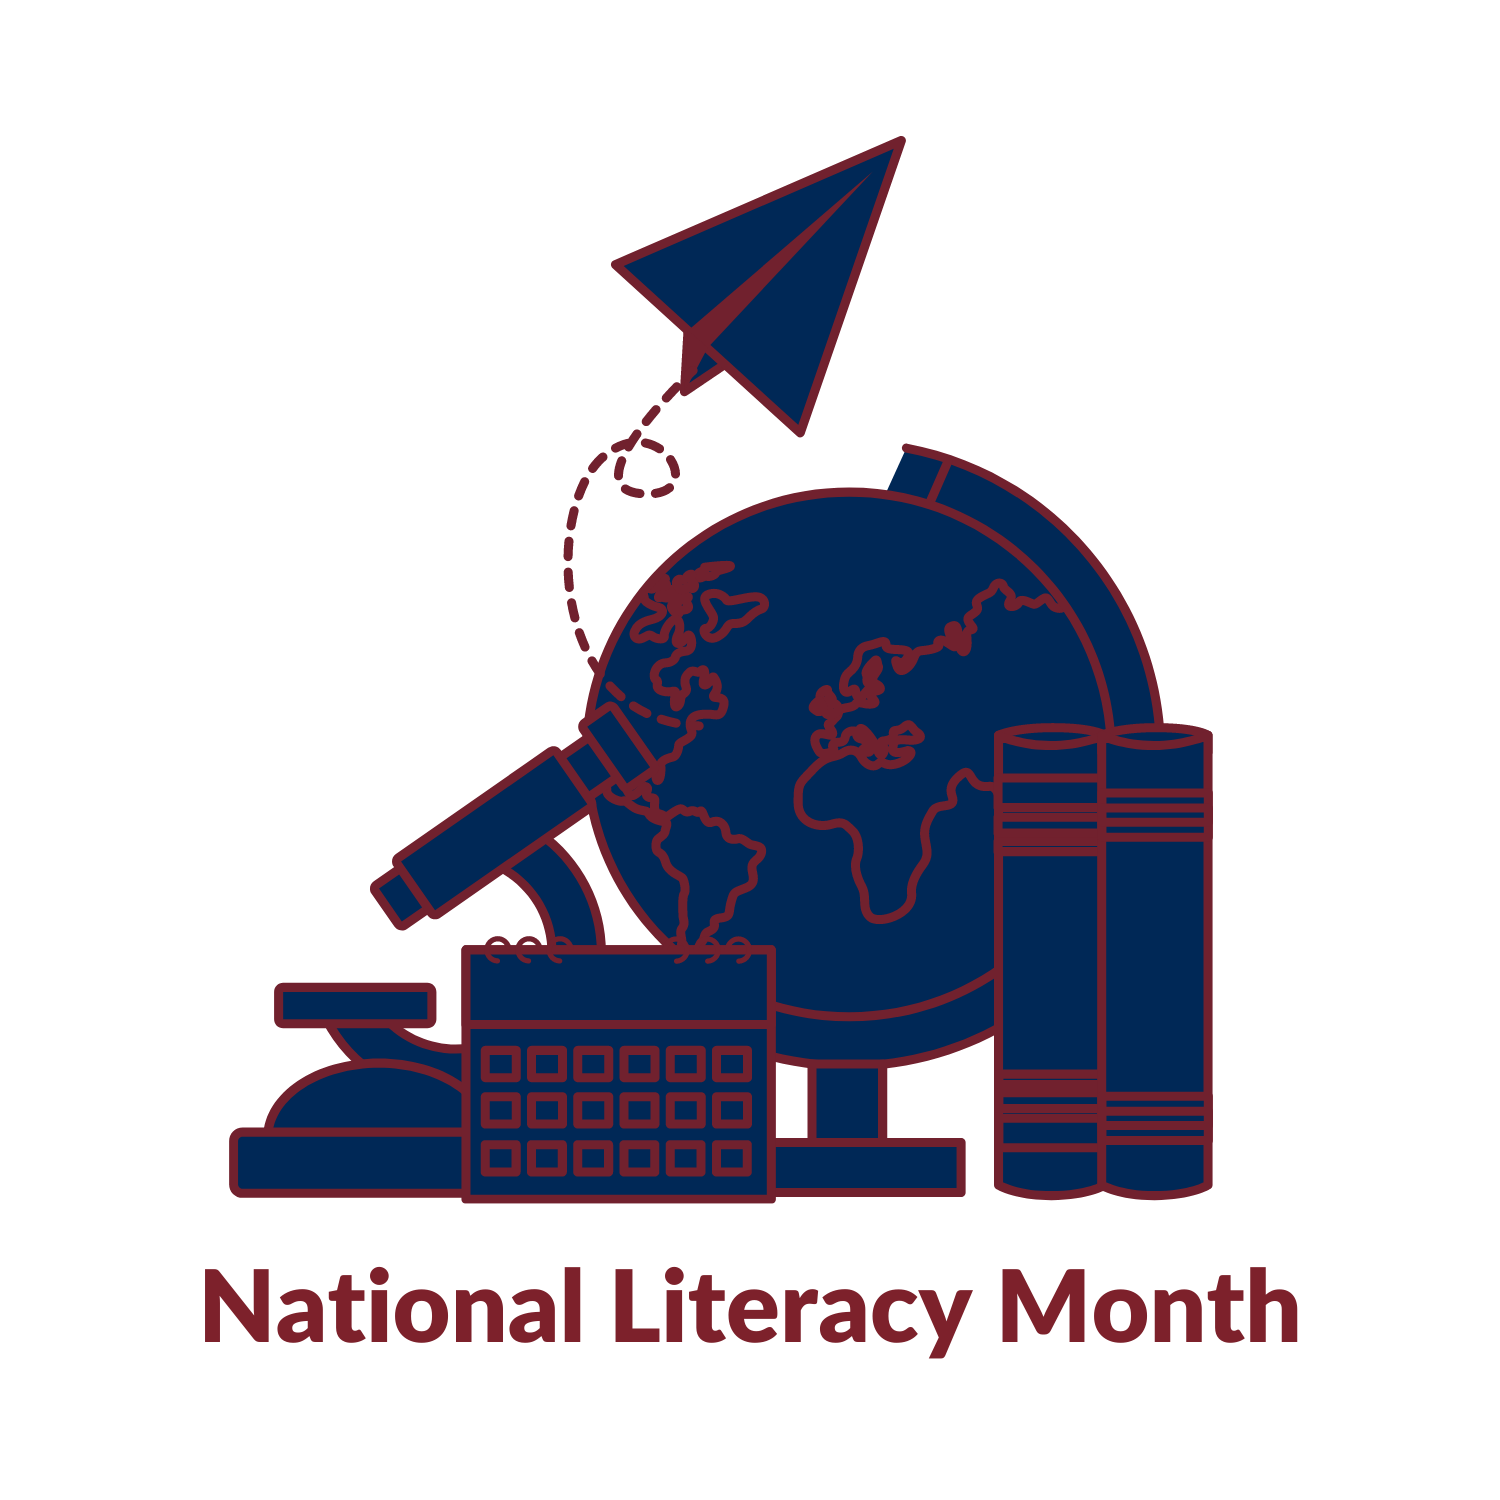 National Literacy Month logo